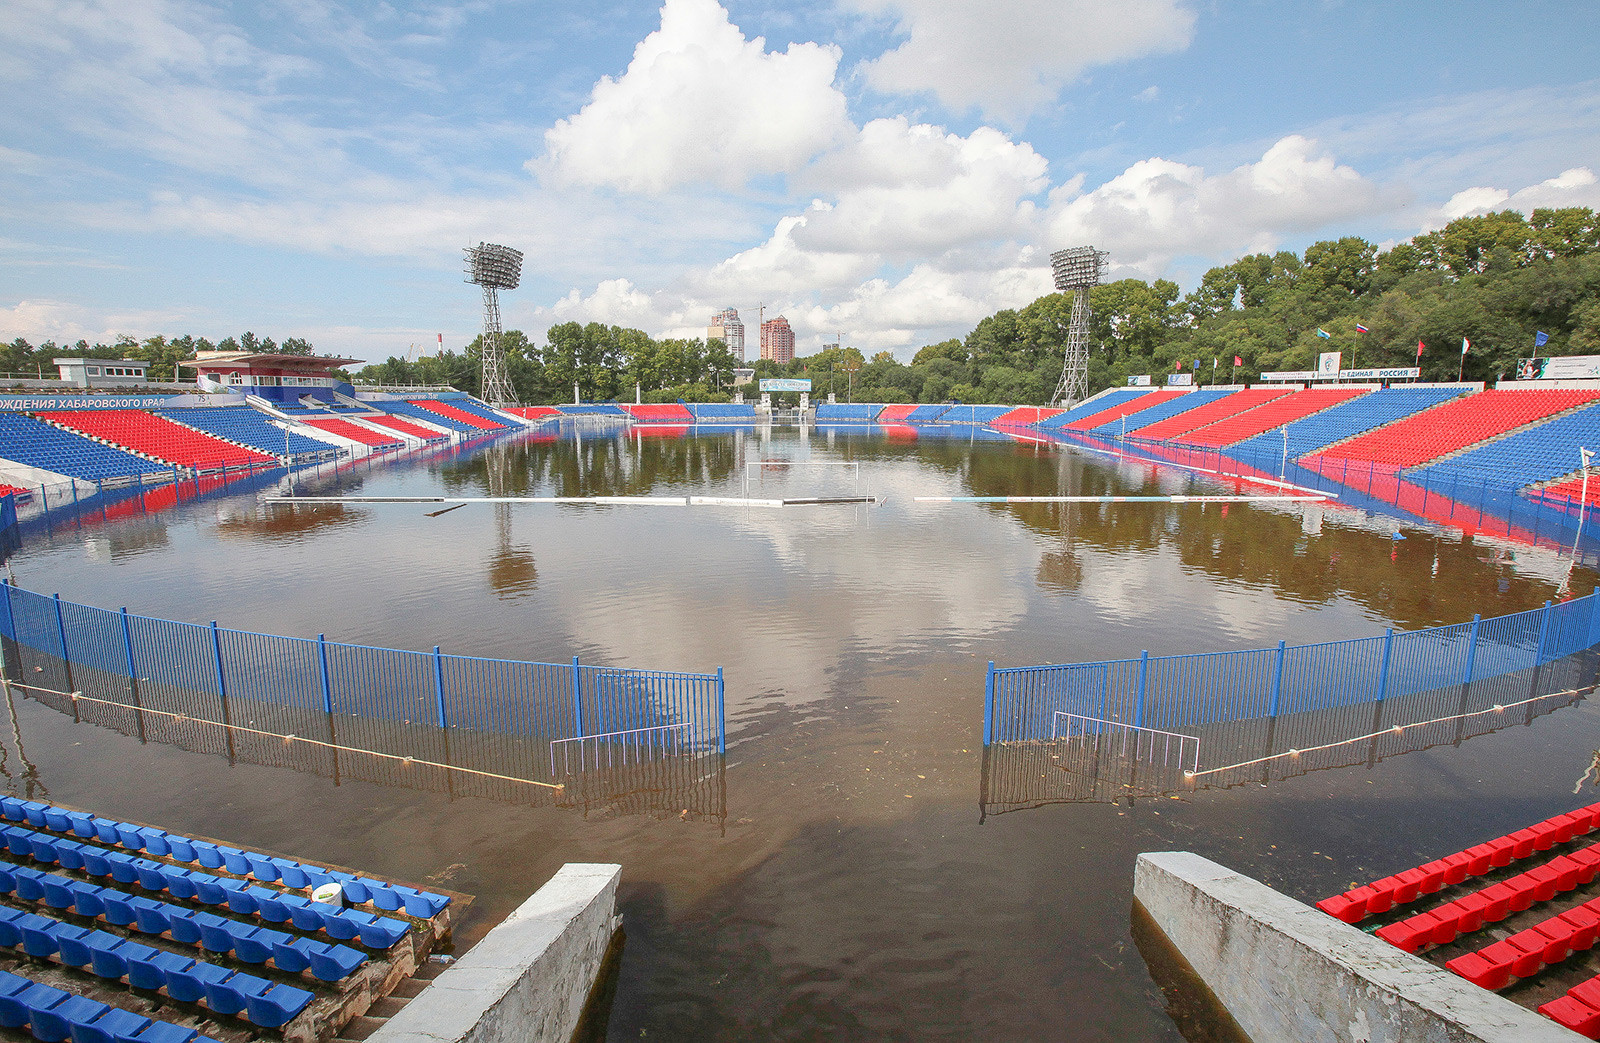 Stadion Lenin, arena klub sepak bola lokal SKA-Energiya, di Khabarovsk terendam banjir.